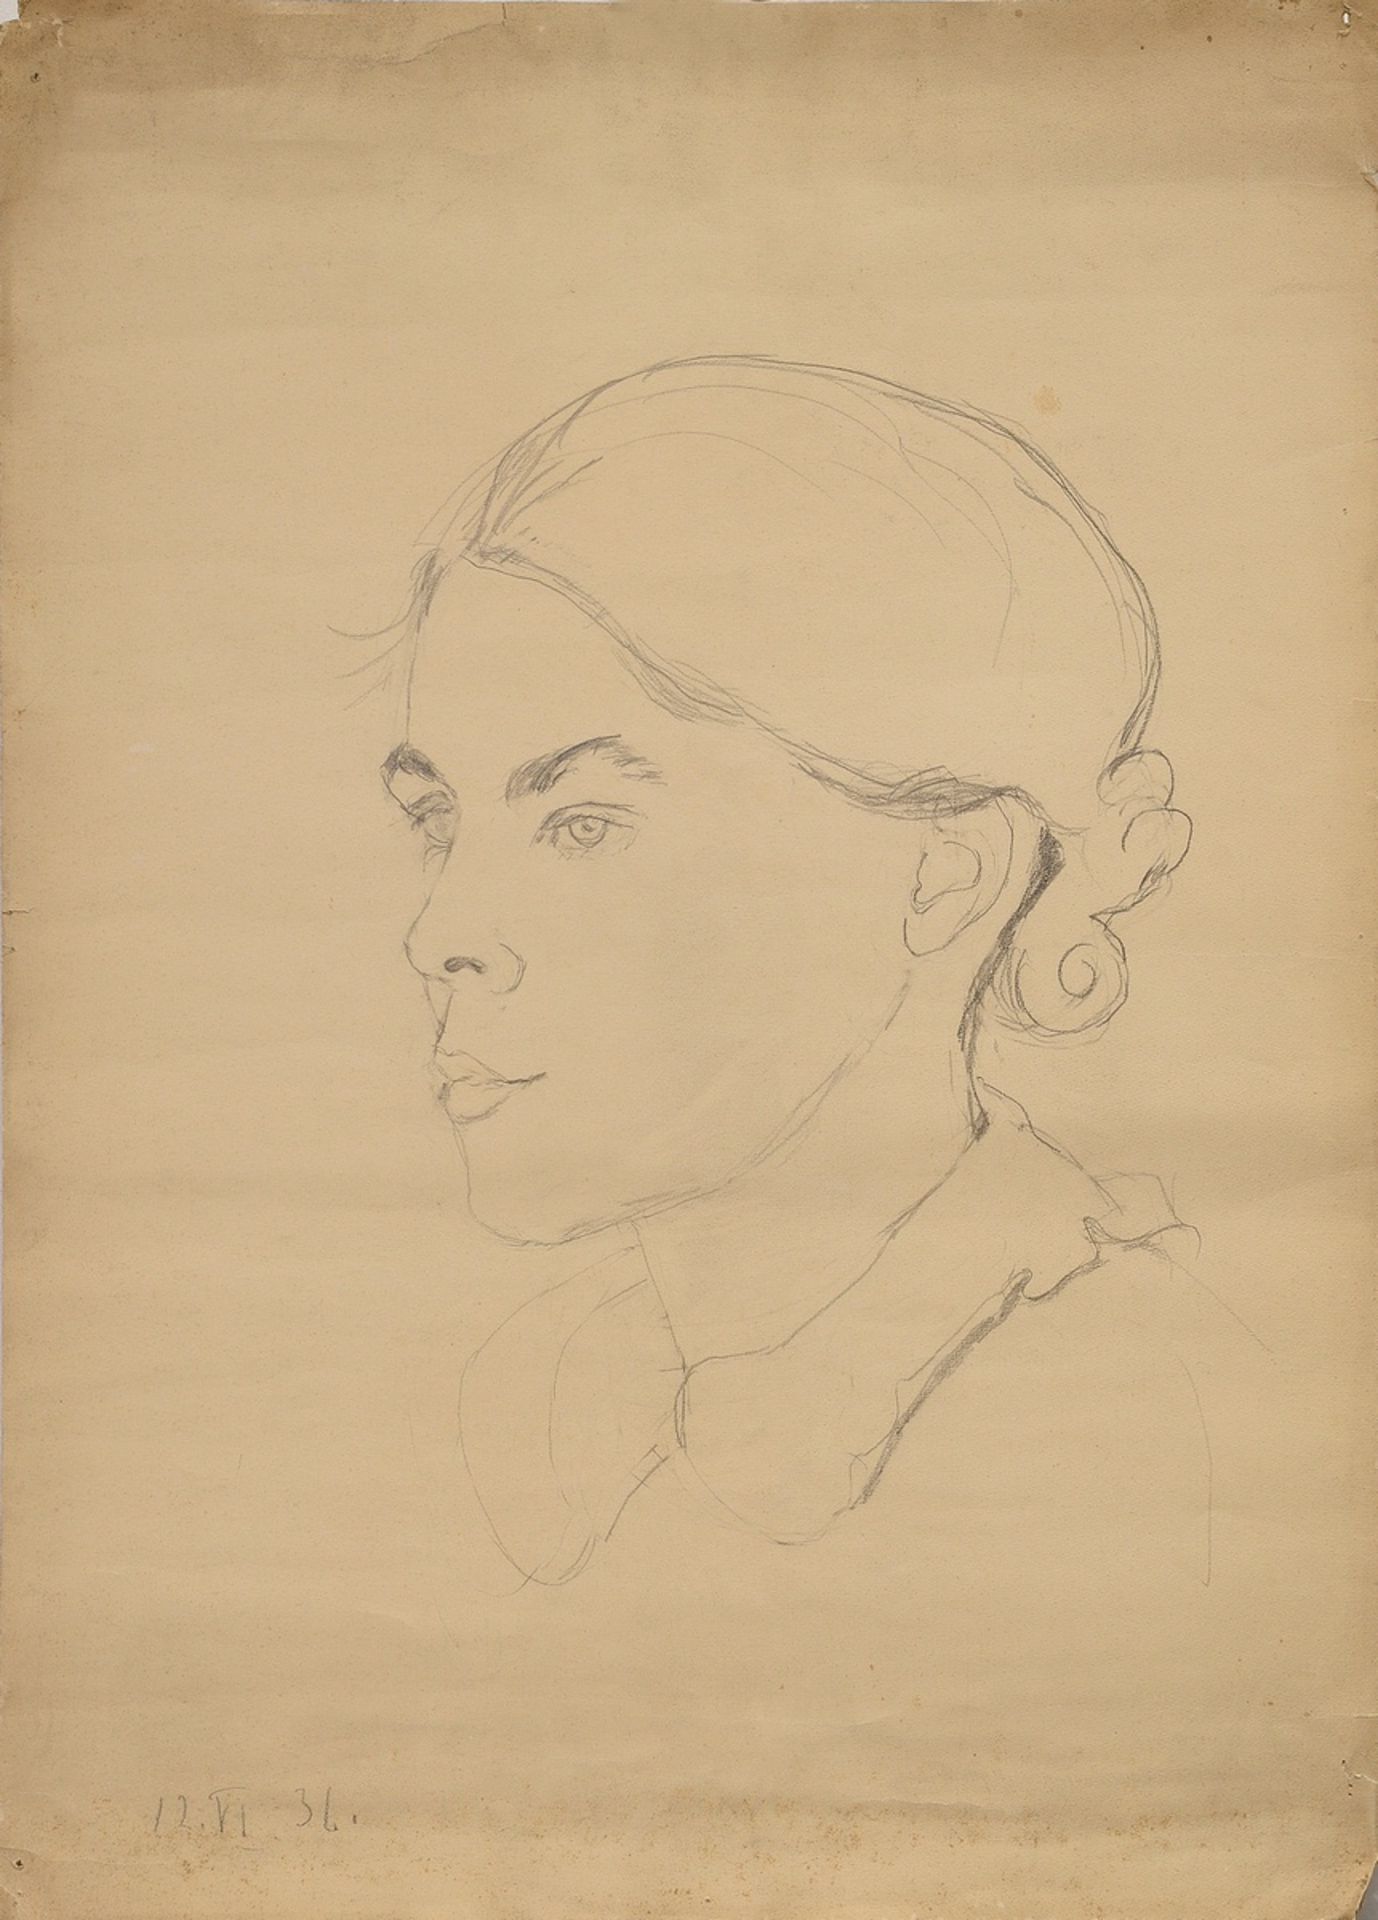 Bargheer, Eduard (1901-1979) "Susanne Bonte (30 years old)" 1936, pencil, b.l. dat. SM 70x49.5cm, s